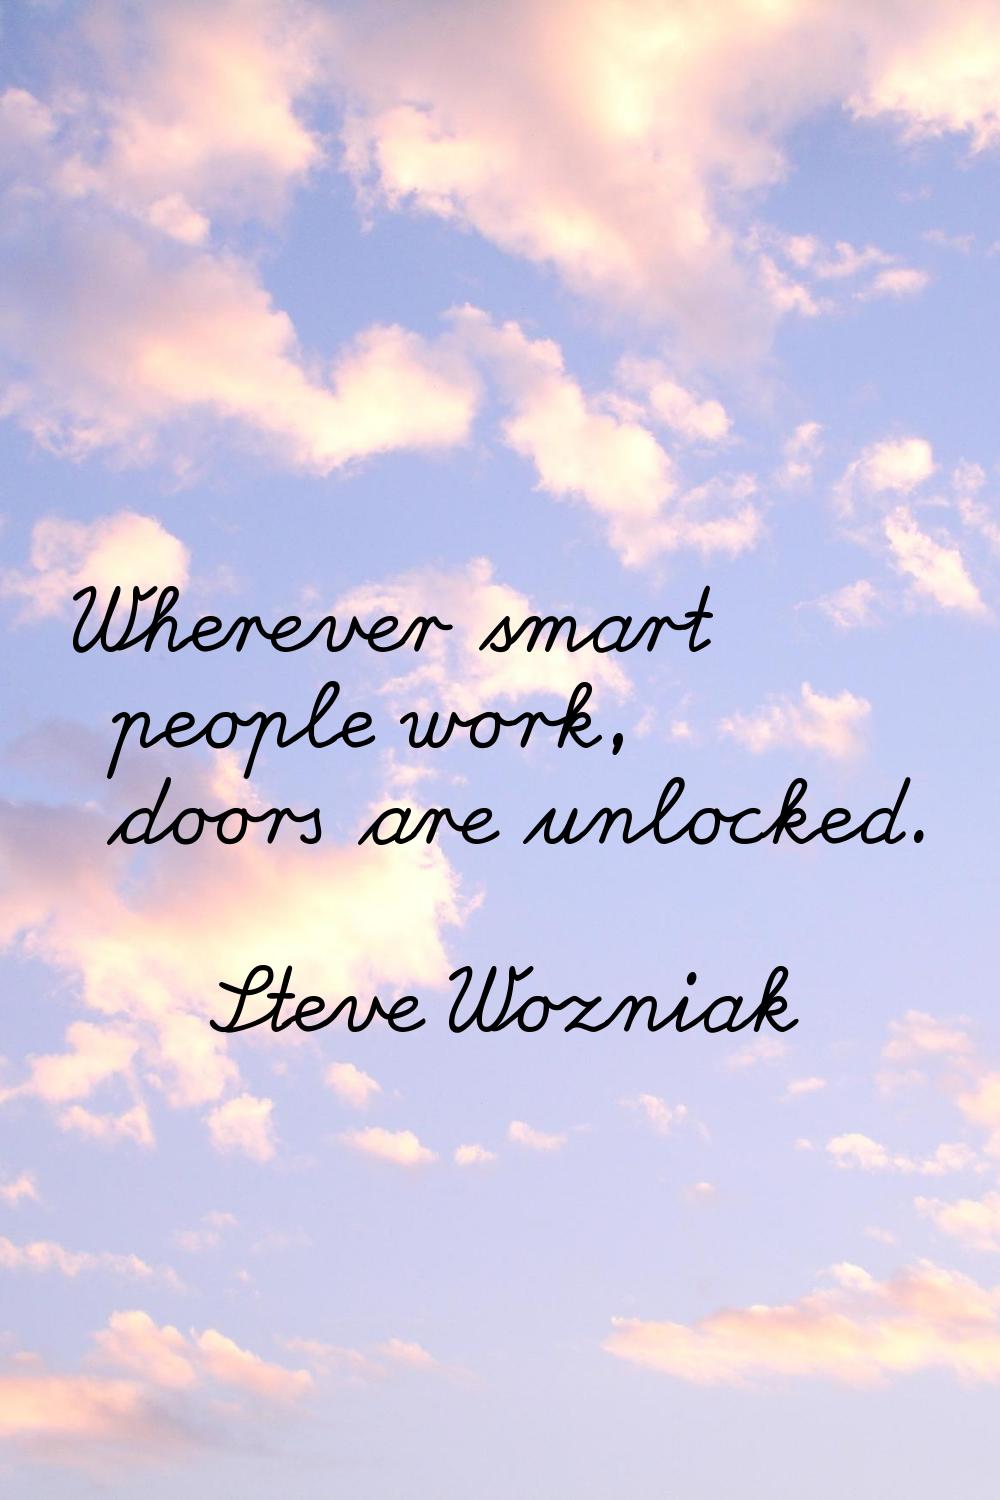 Wherever smart people work, doors are unlocked.